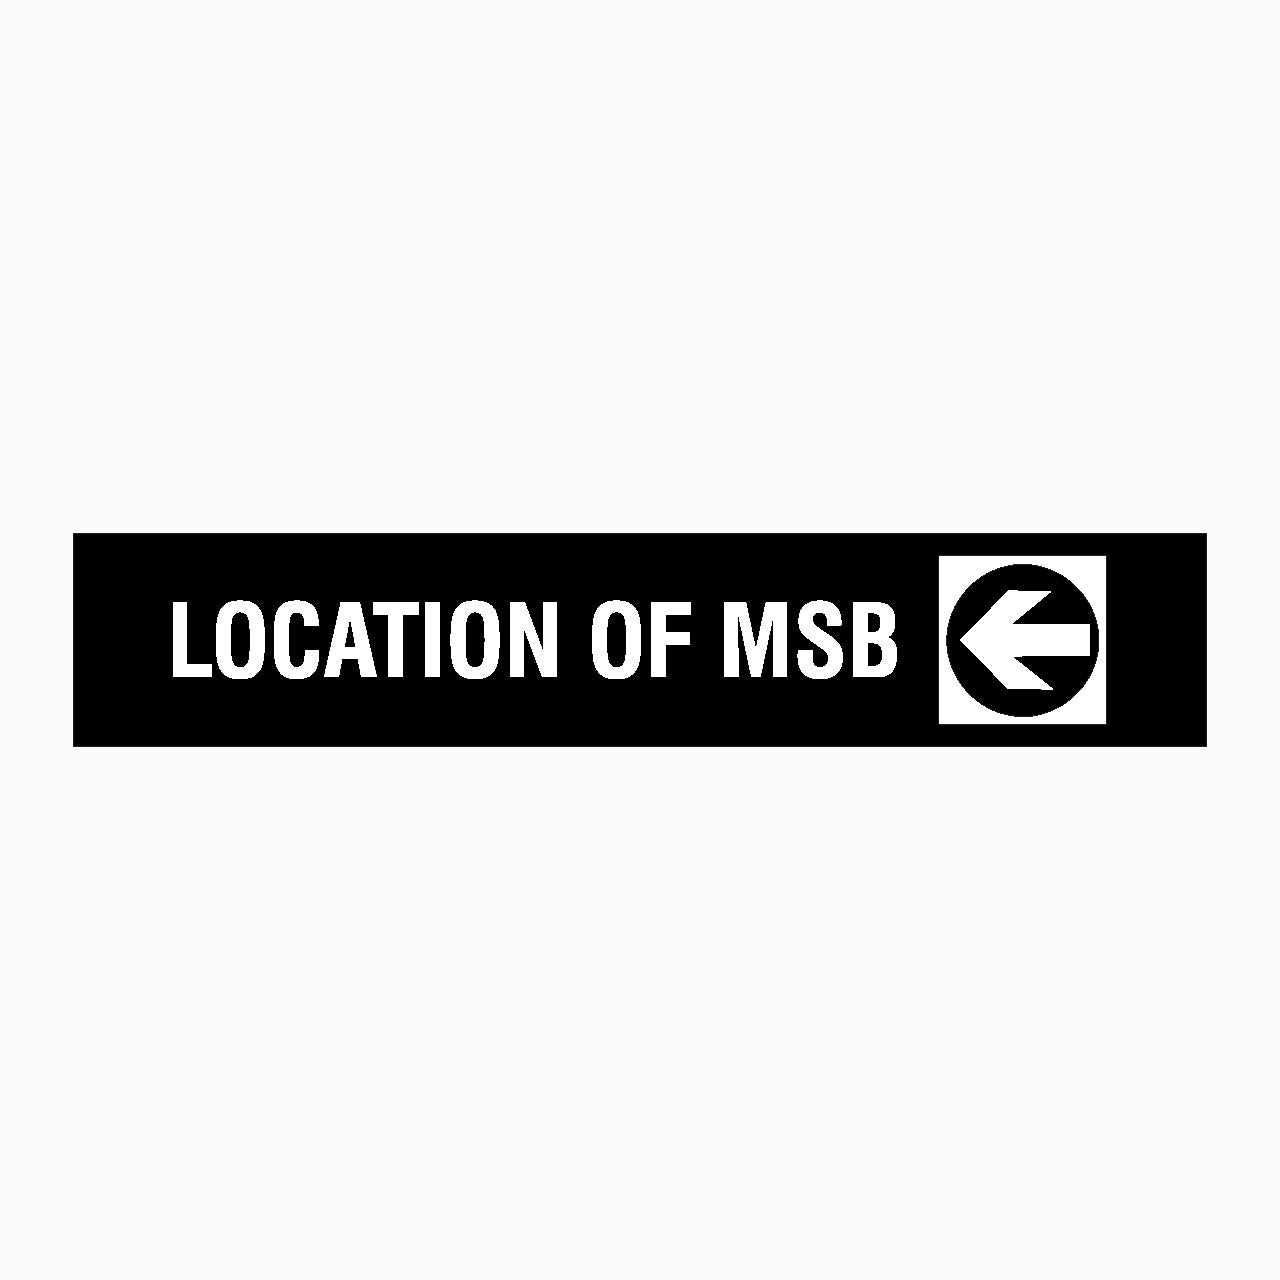 LOCATION OF MSB - LEFT ARROW SIGN